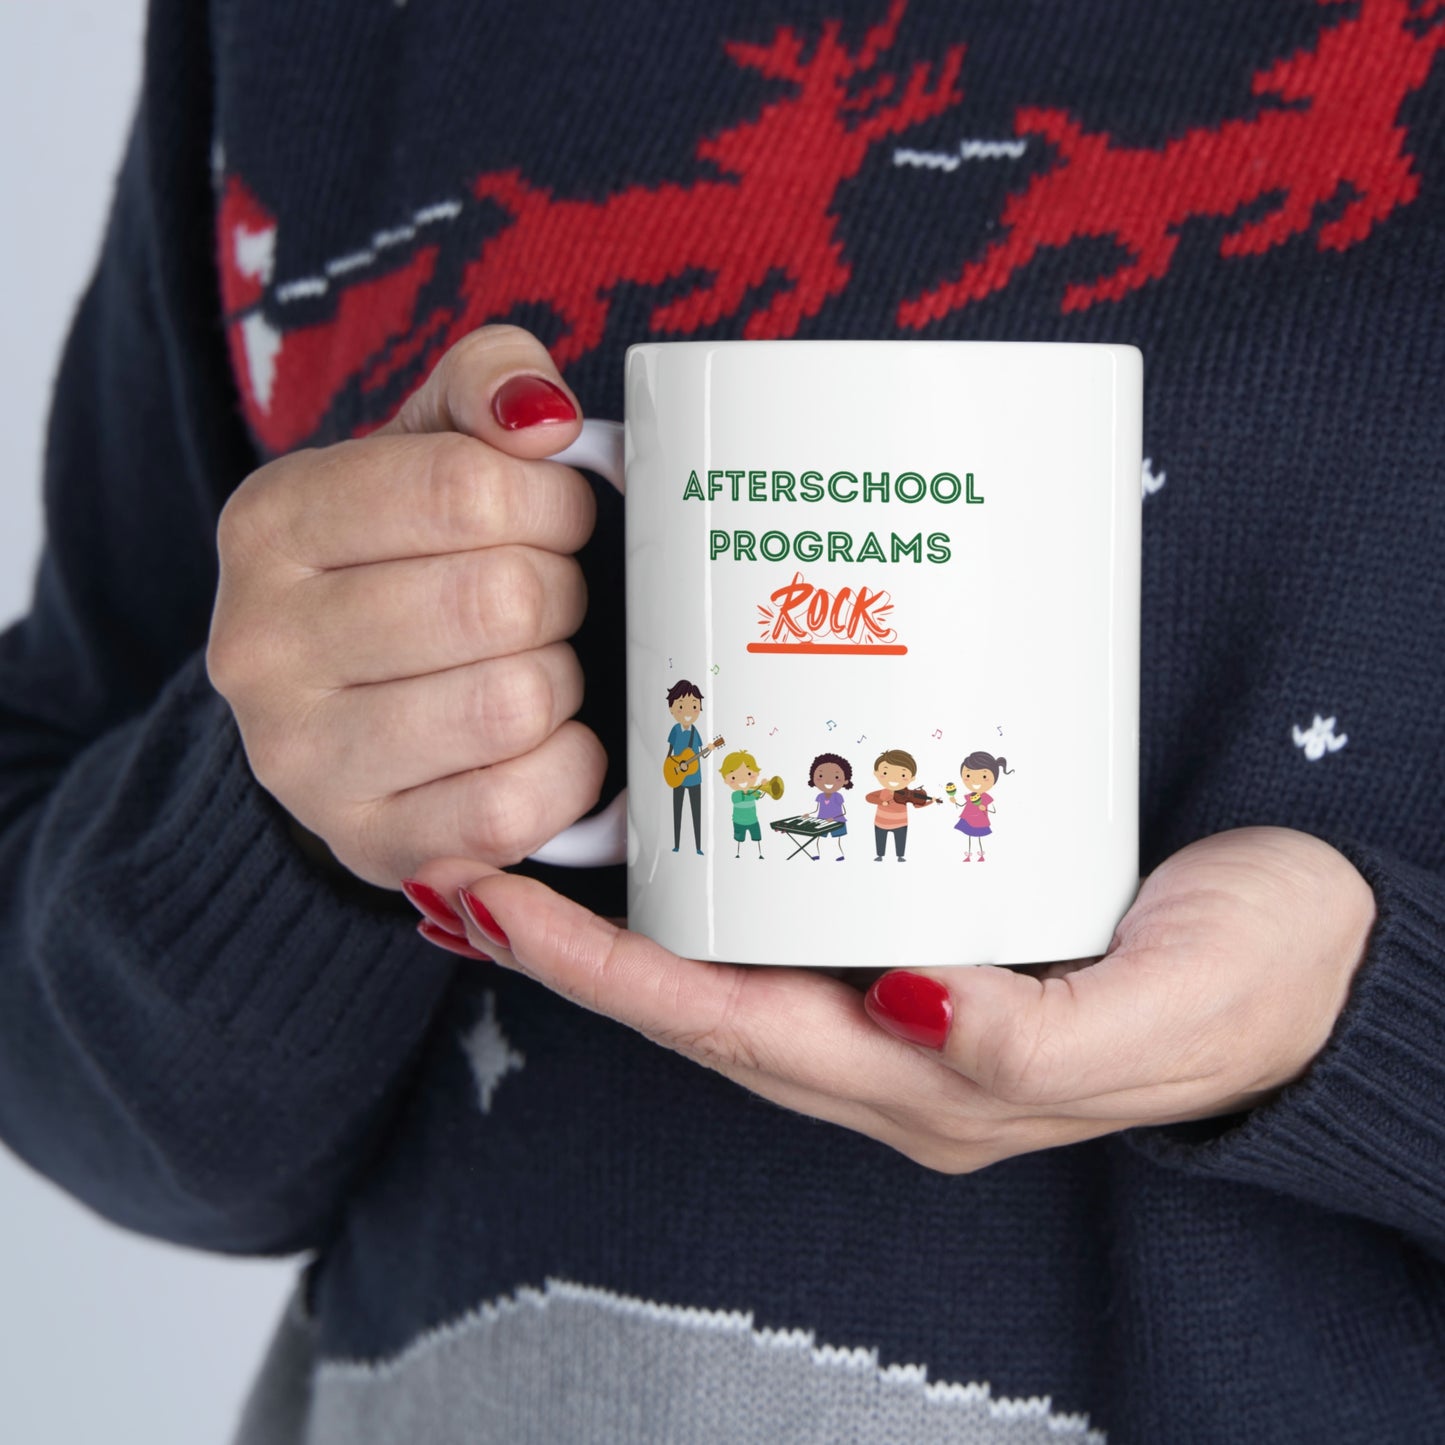 Afterschool Programs Rock - Ceramic Mug 11oz